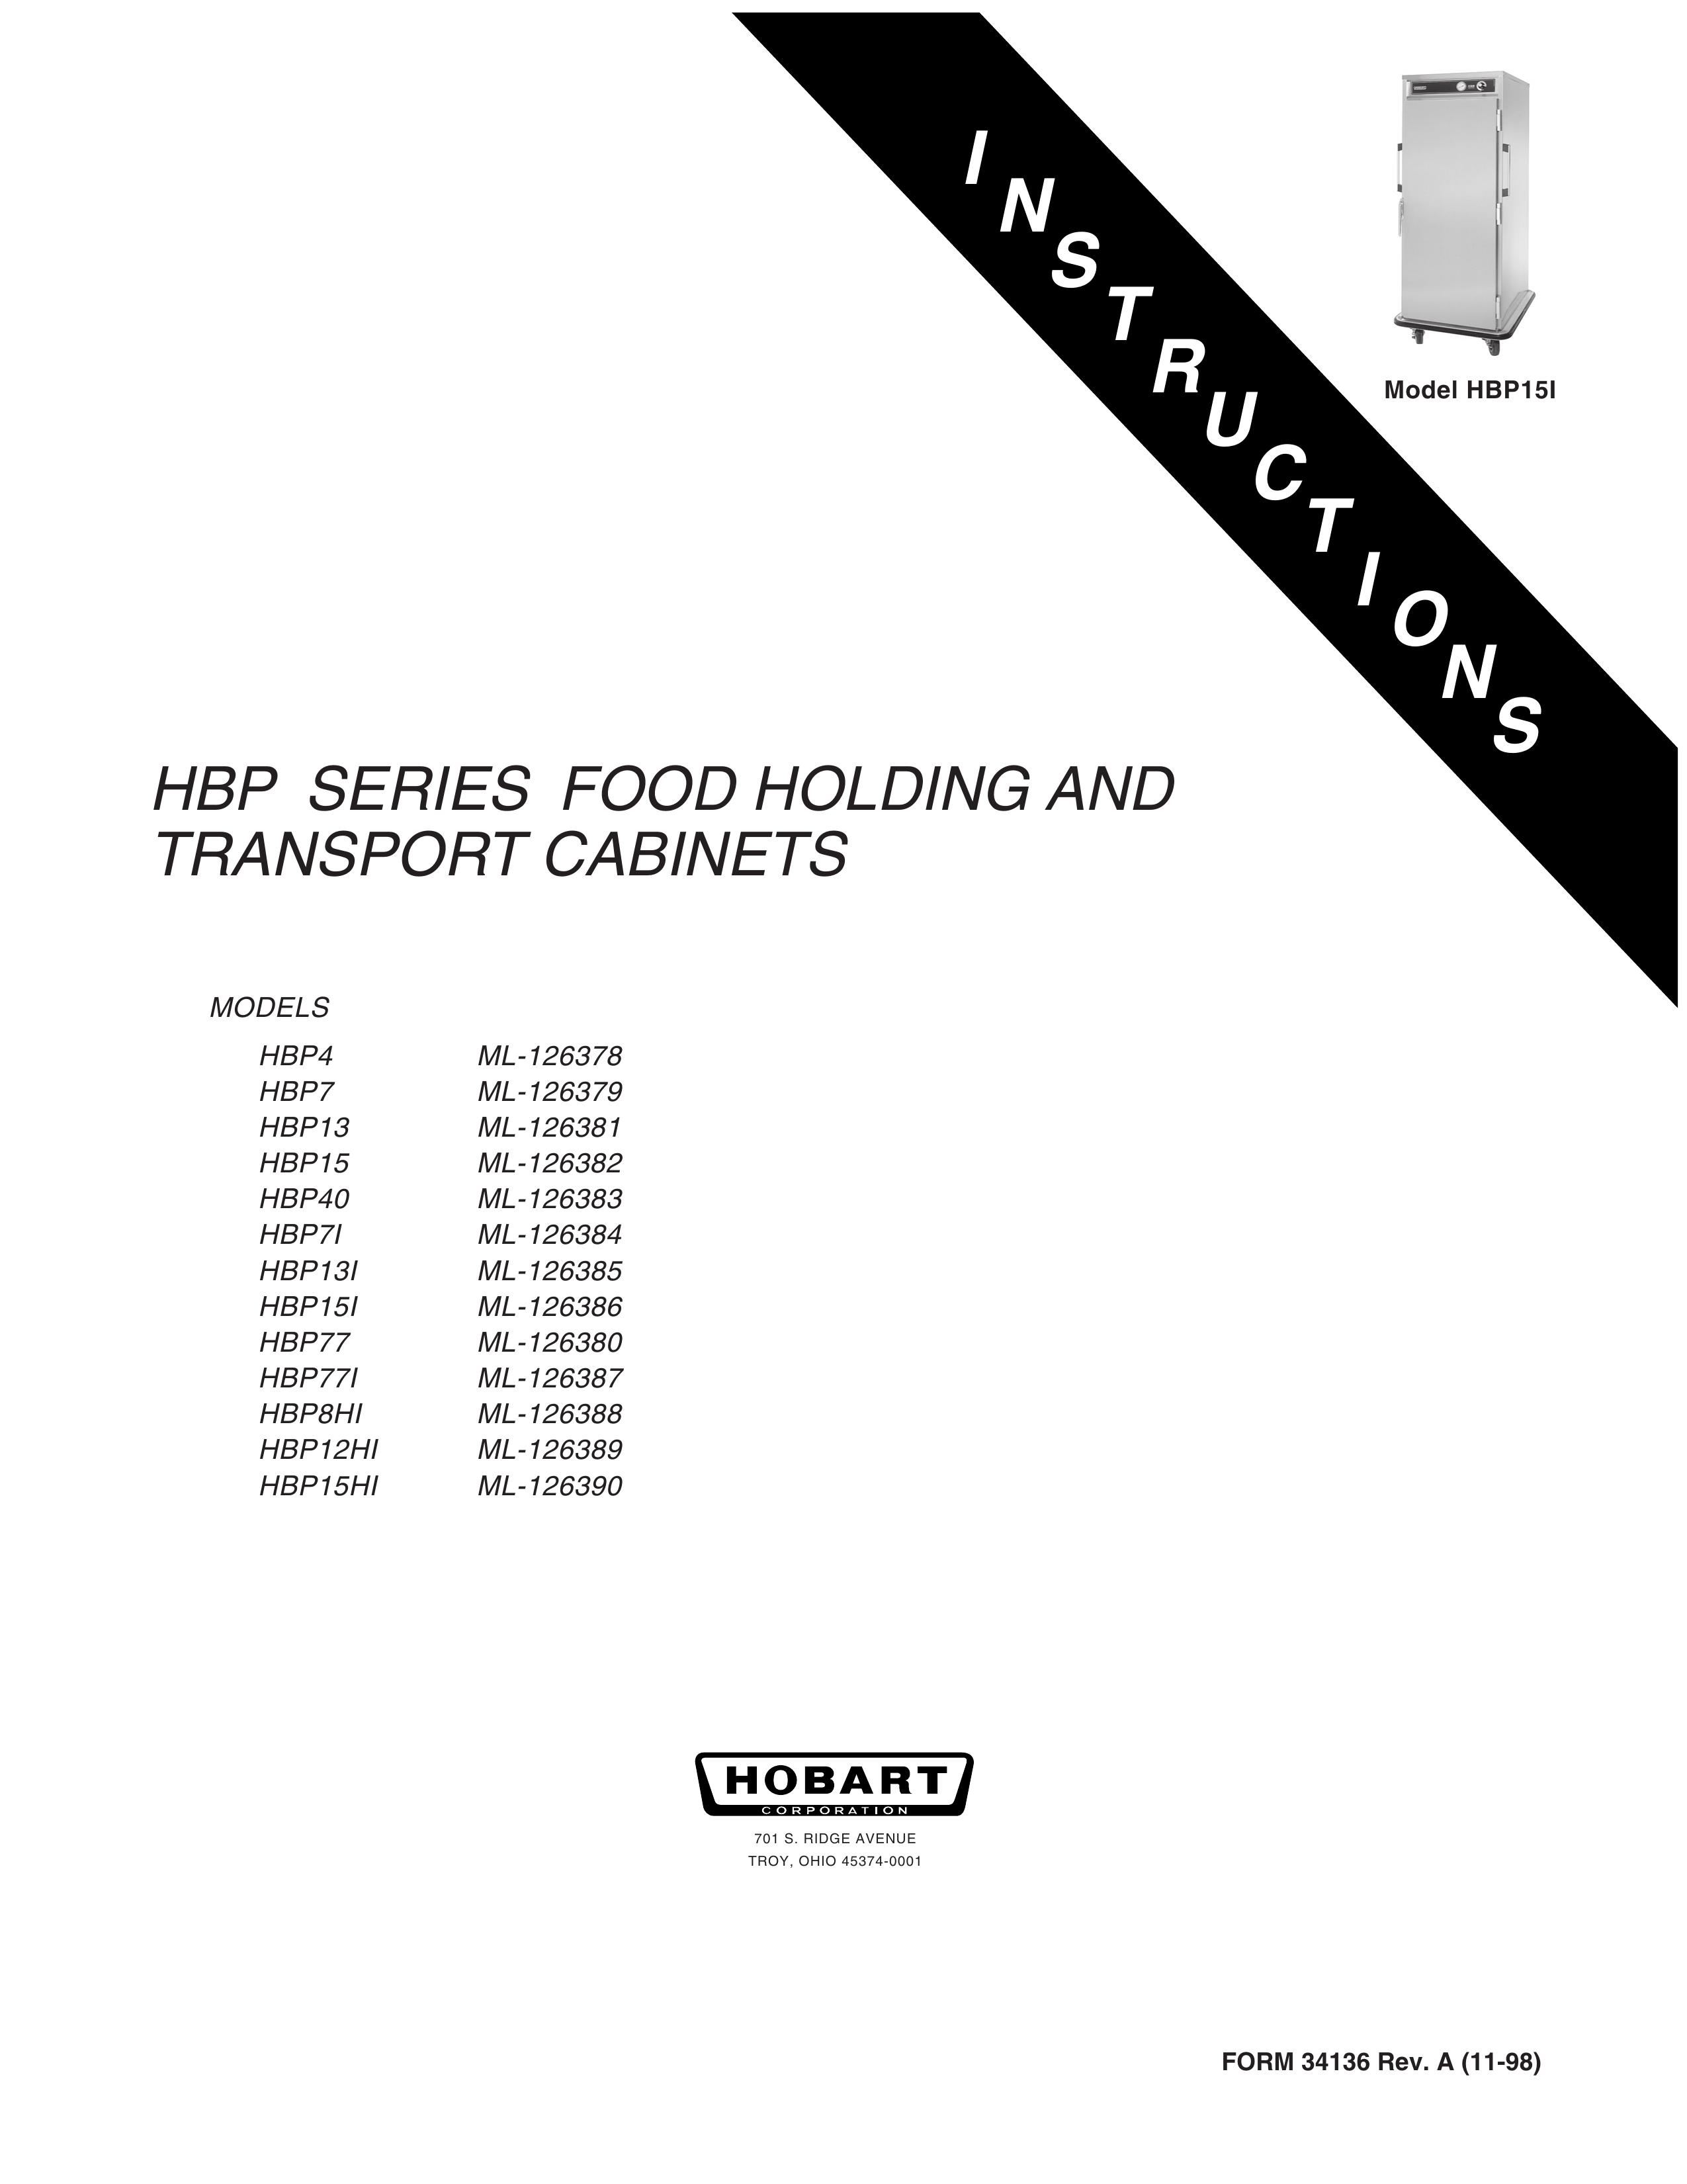 Hobart HBP7I ML-126384 Outdoor Storage User Manual